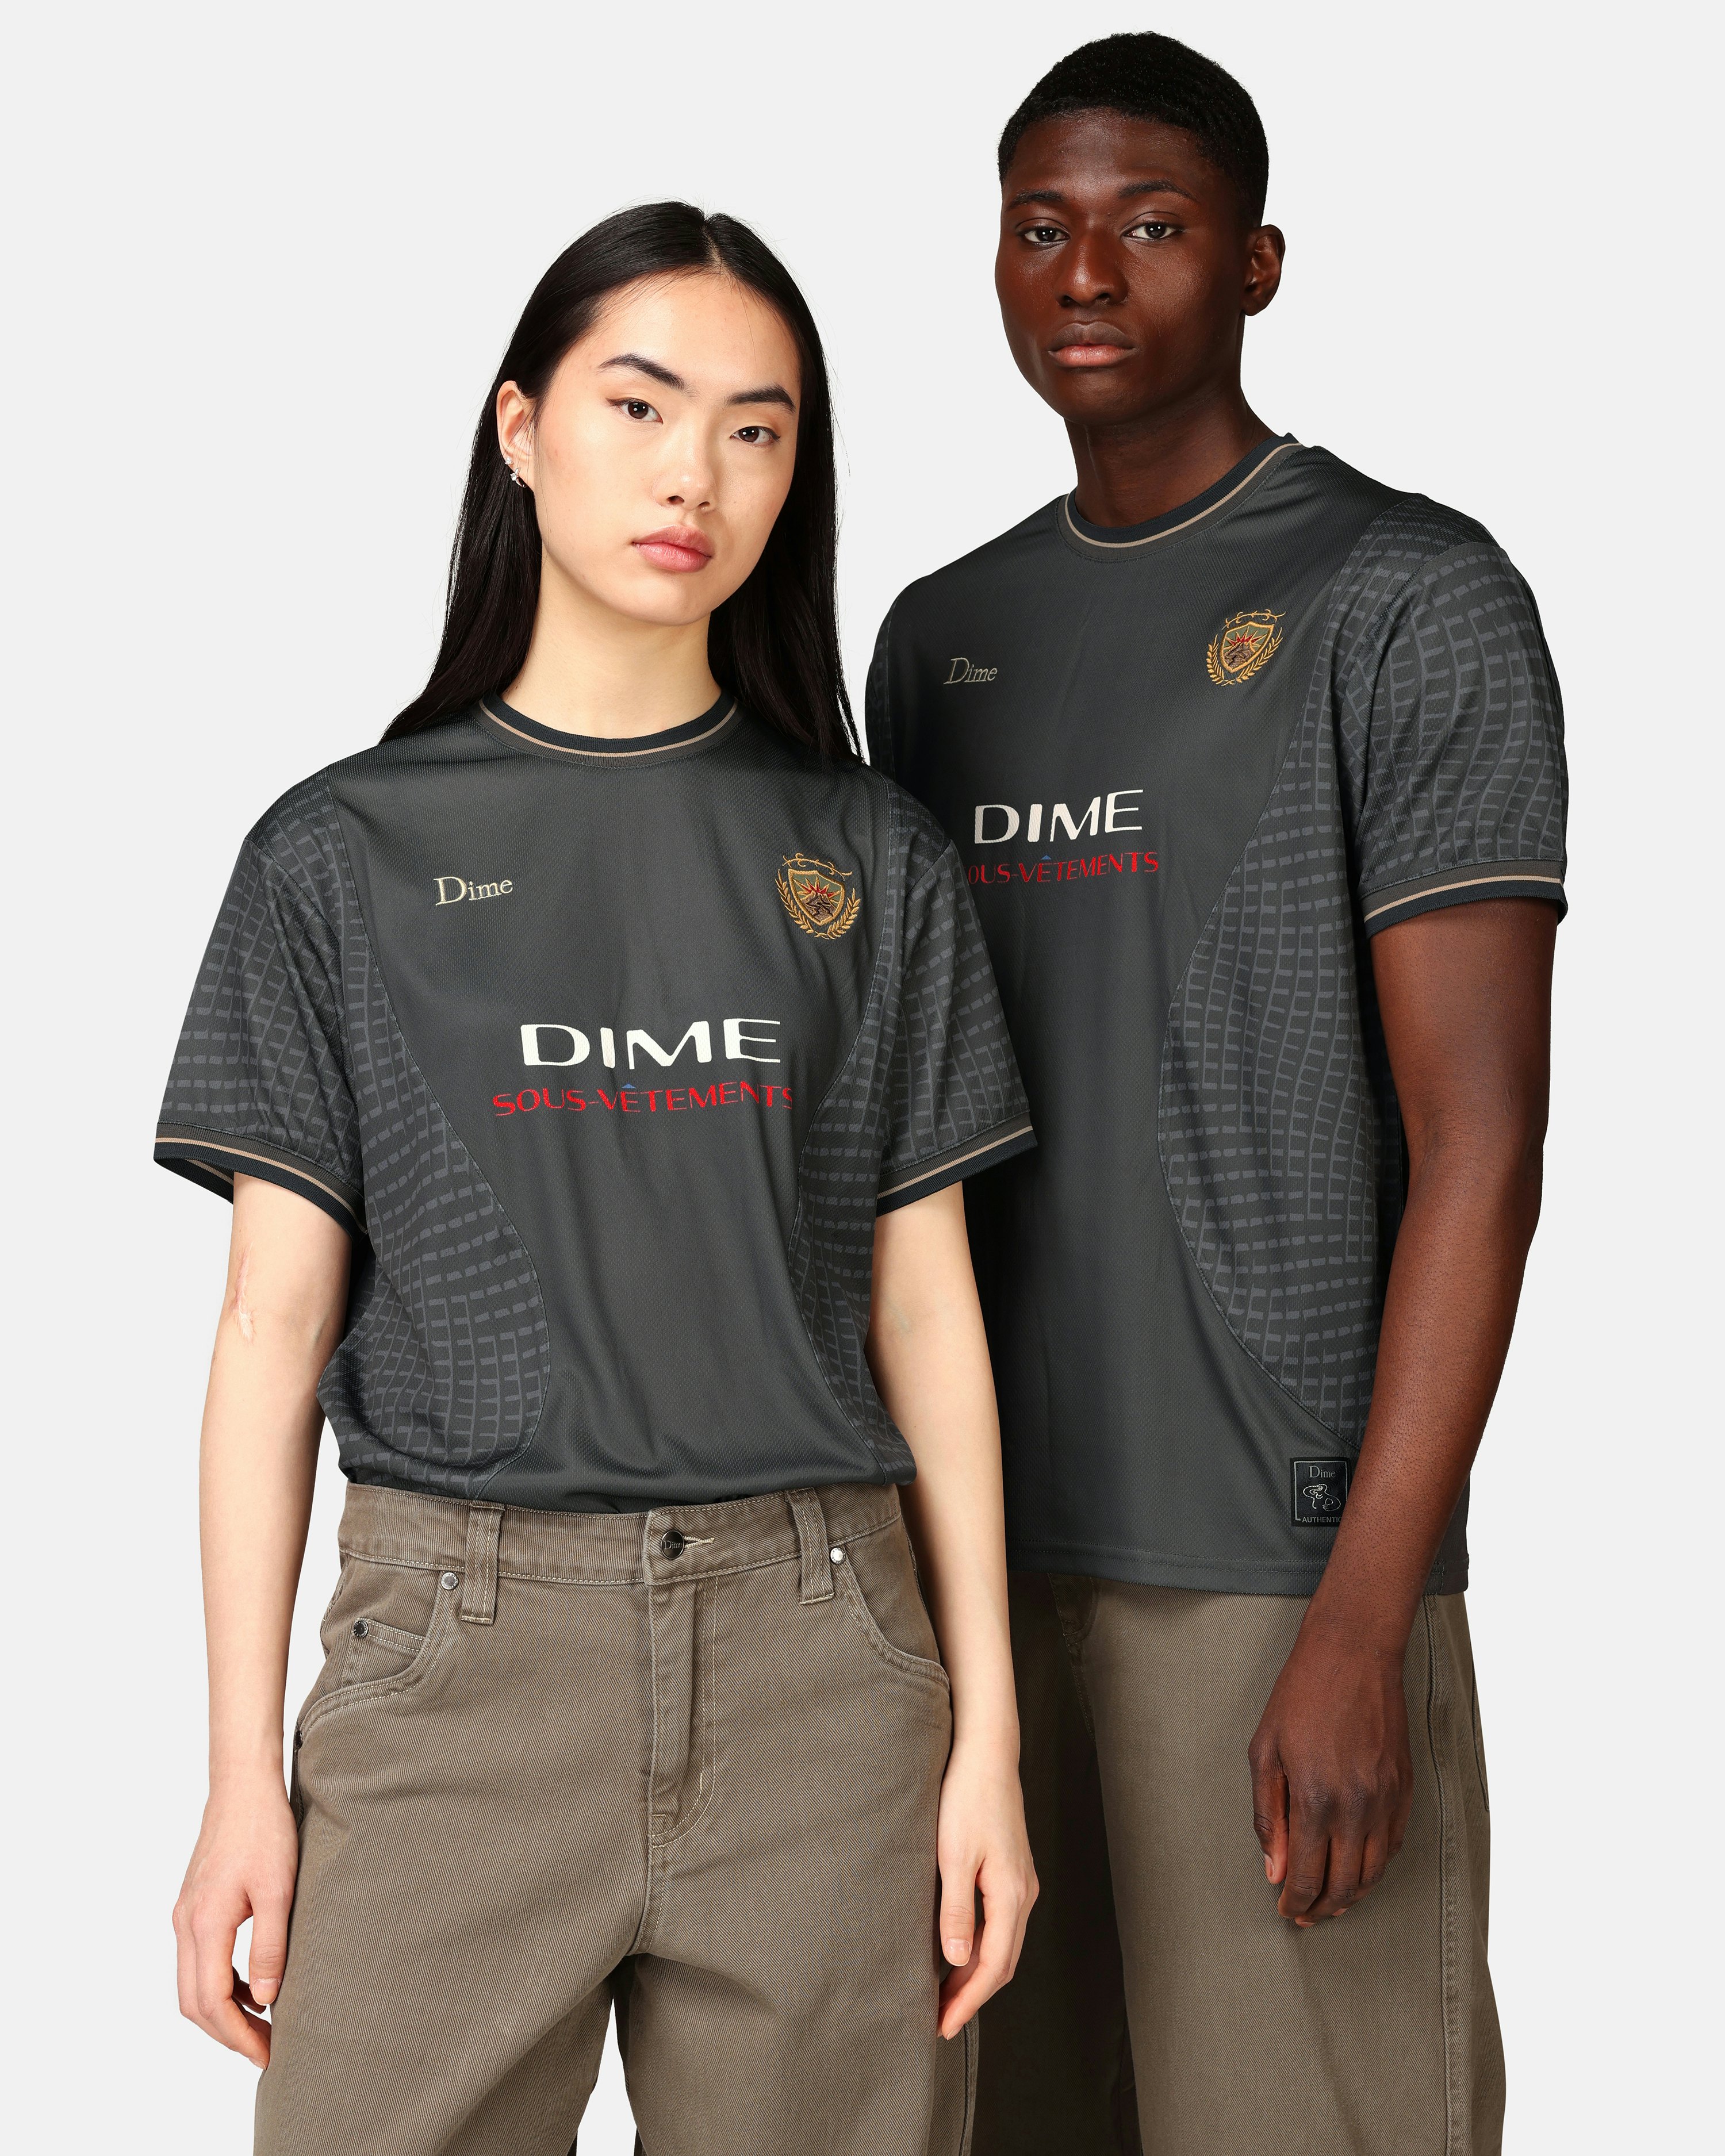 Dime T-shirt- Athletic Jersey Dark grey | Unisex | Junkyard